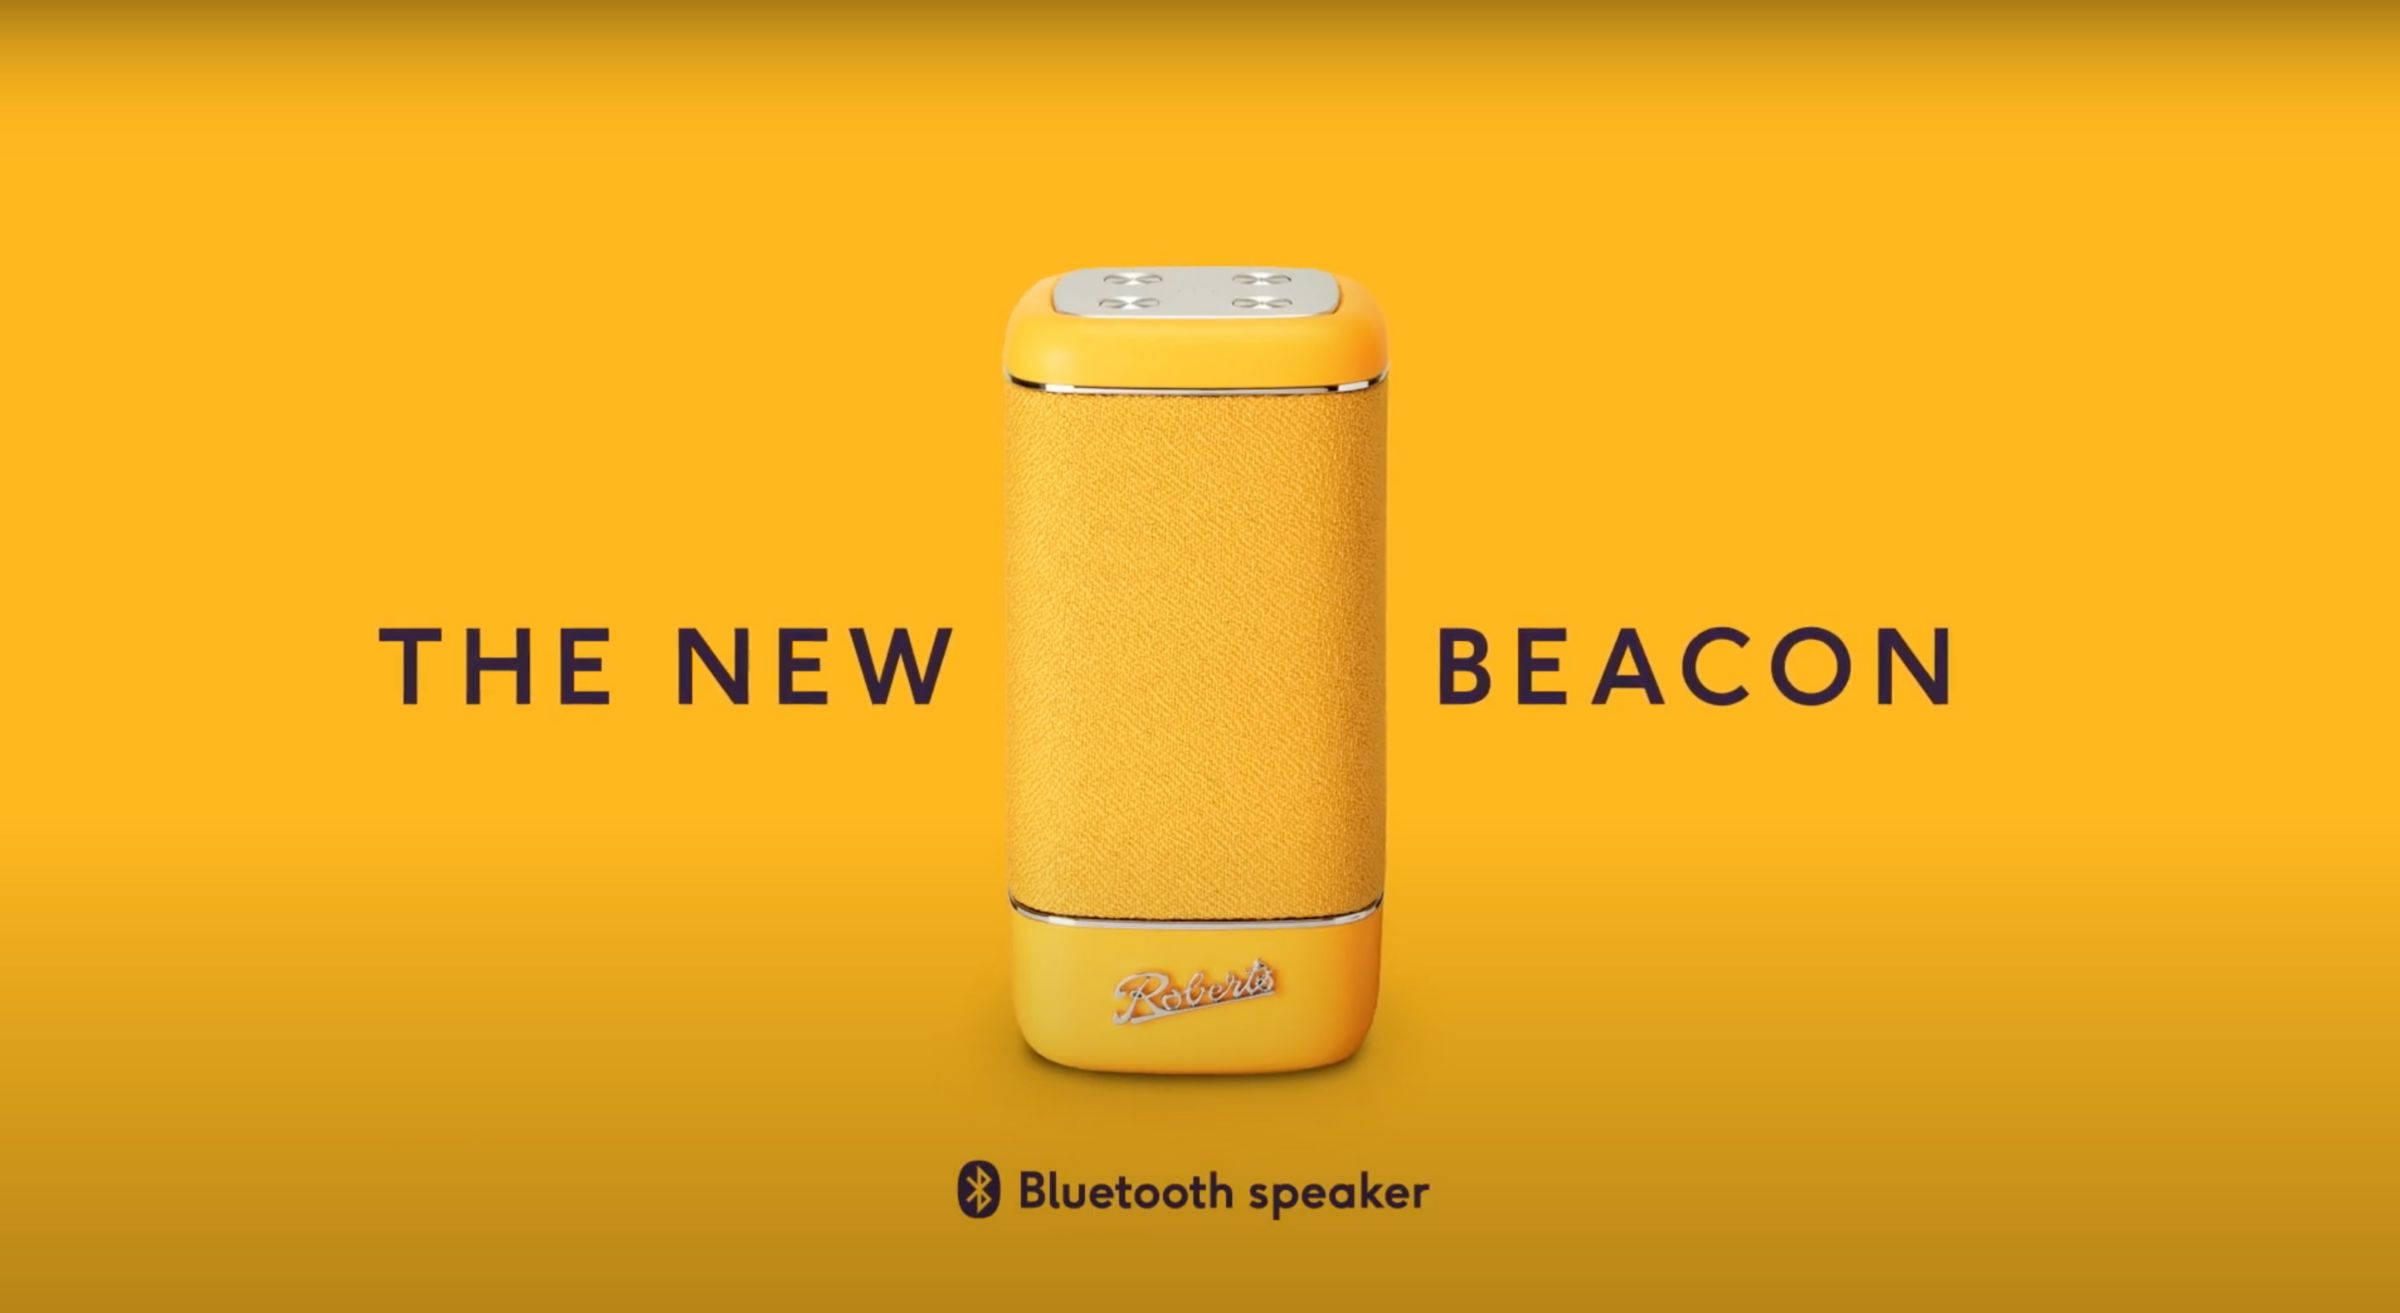 Roberts Beacon Bluetooth Speaker